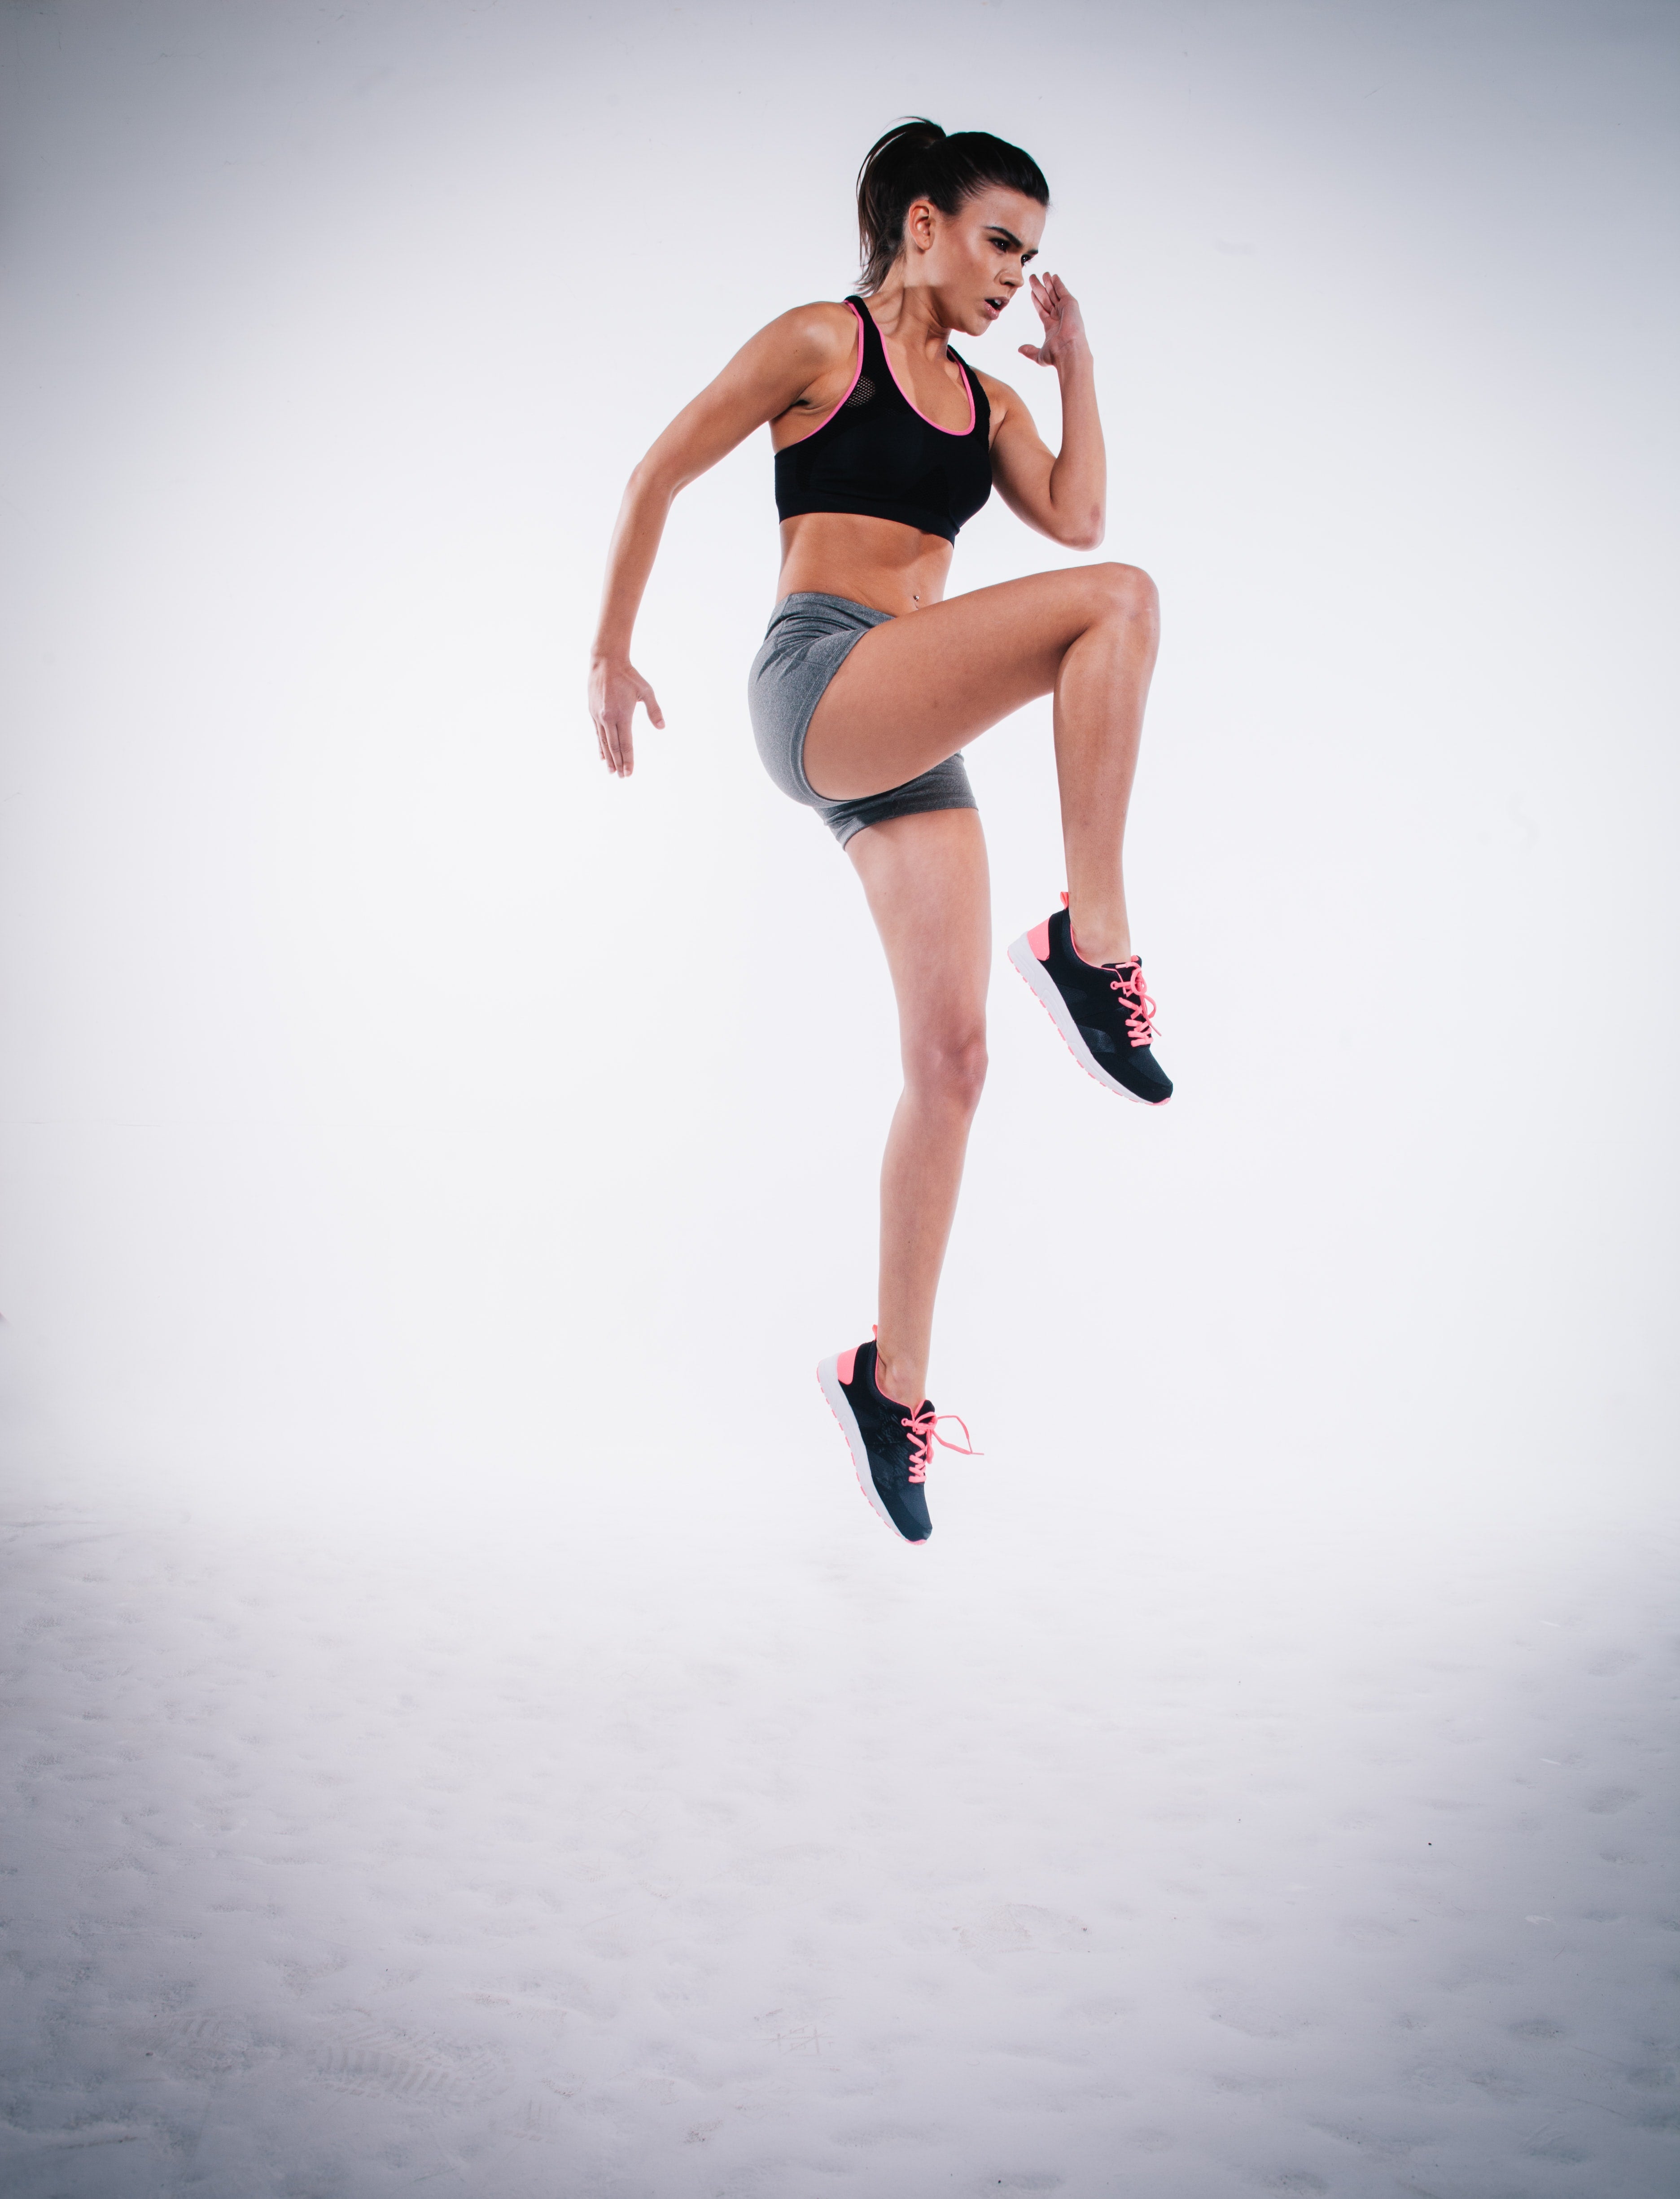 Woman jumping and exercising